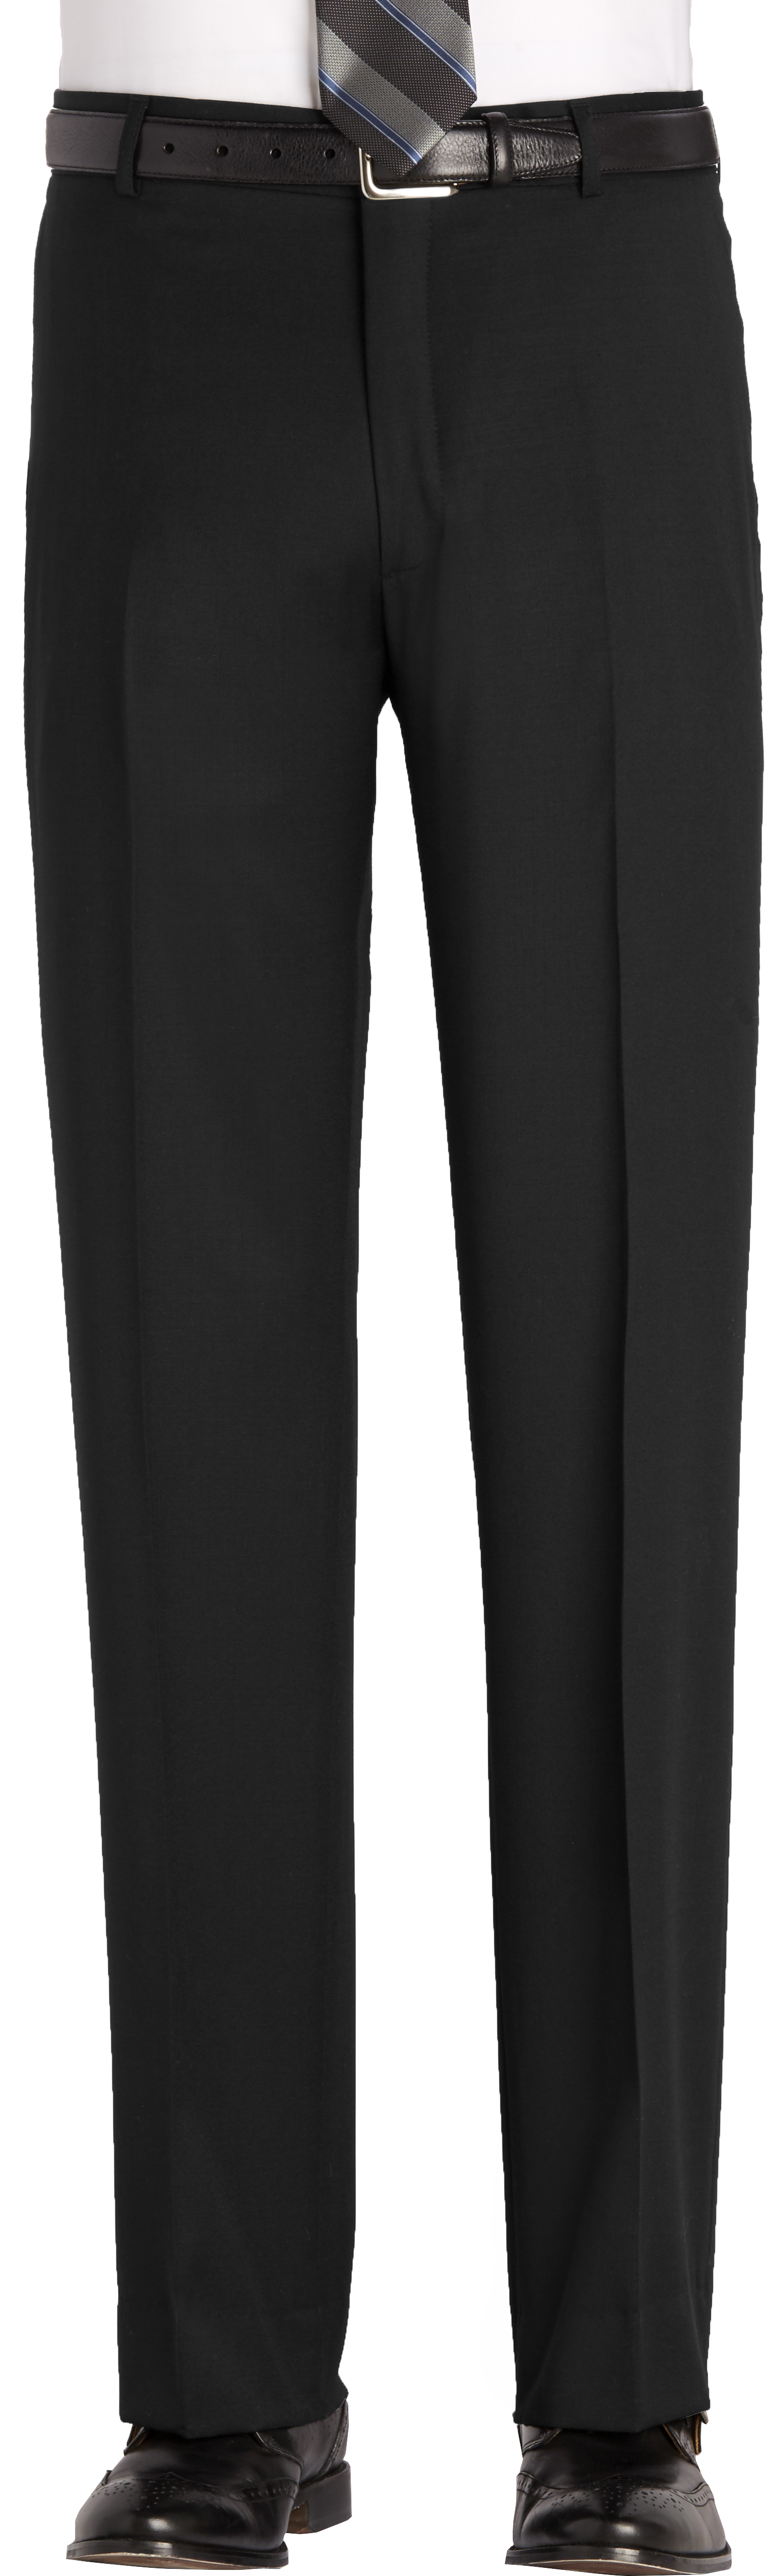 wholesale Black Dress Pants synfulauth.com